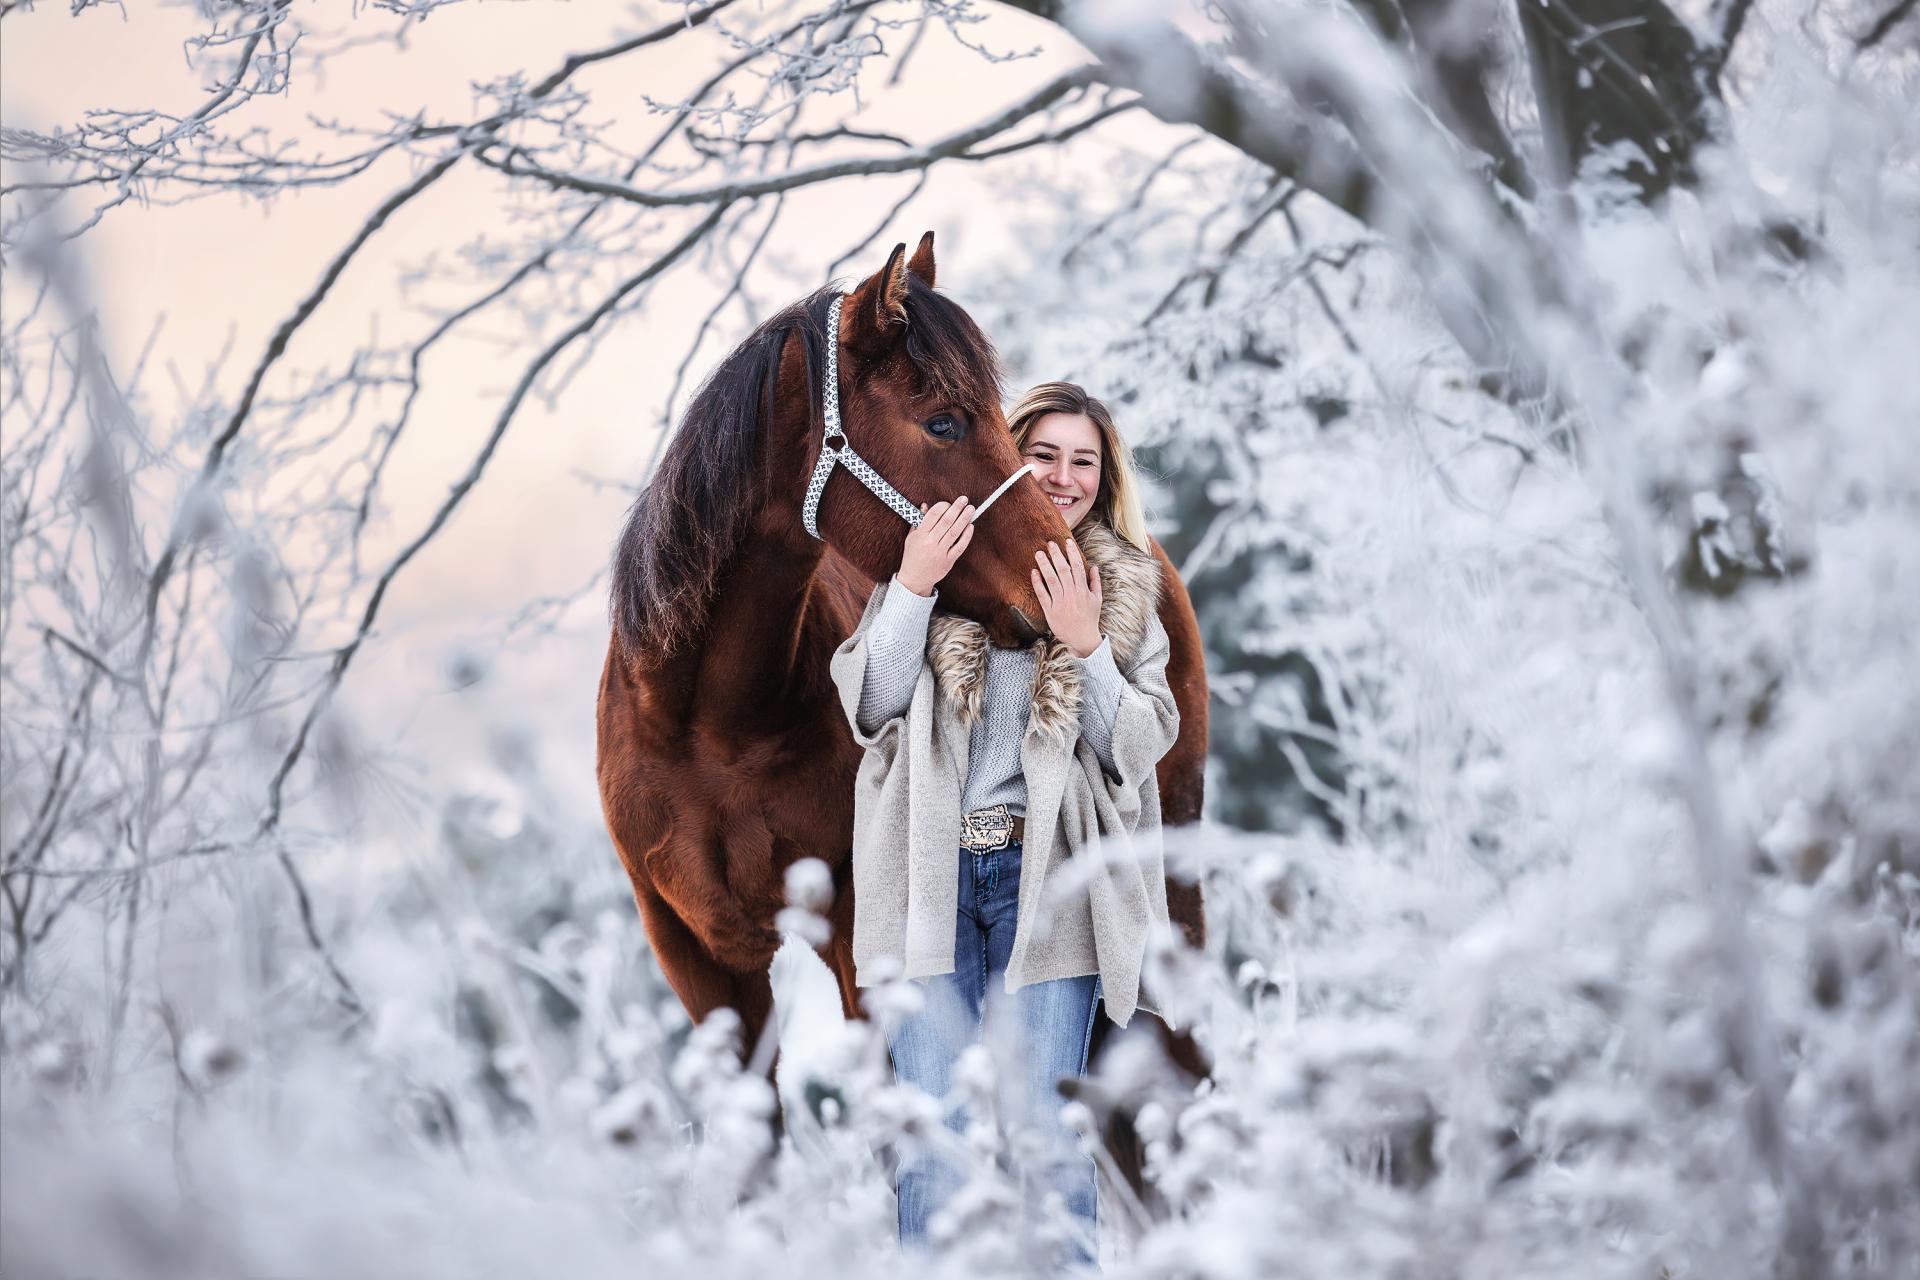 Winter Wonderland with my best friend - MUSE Photography Winner